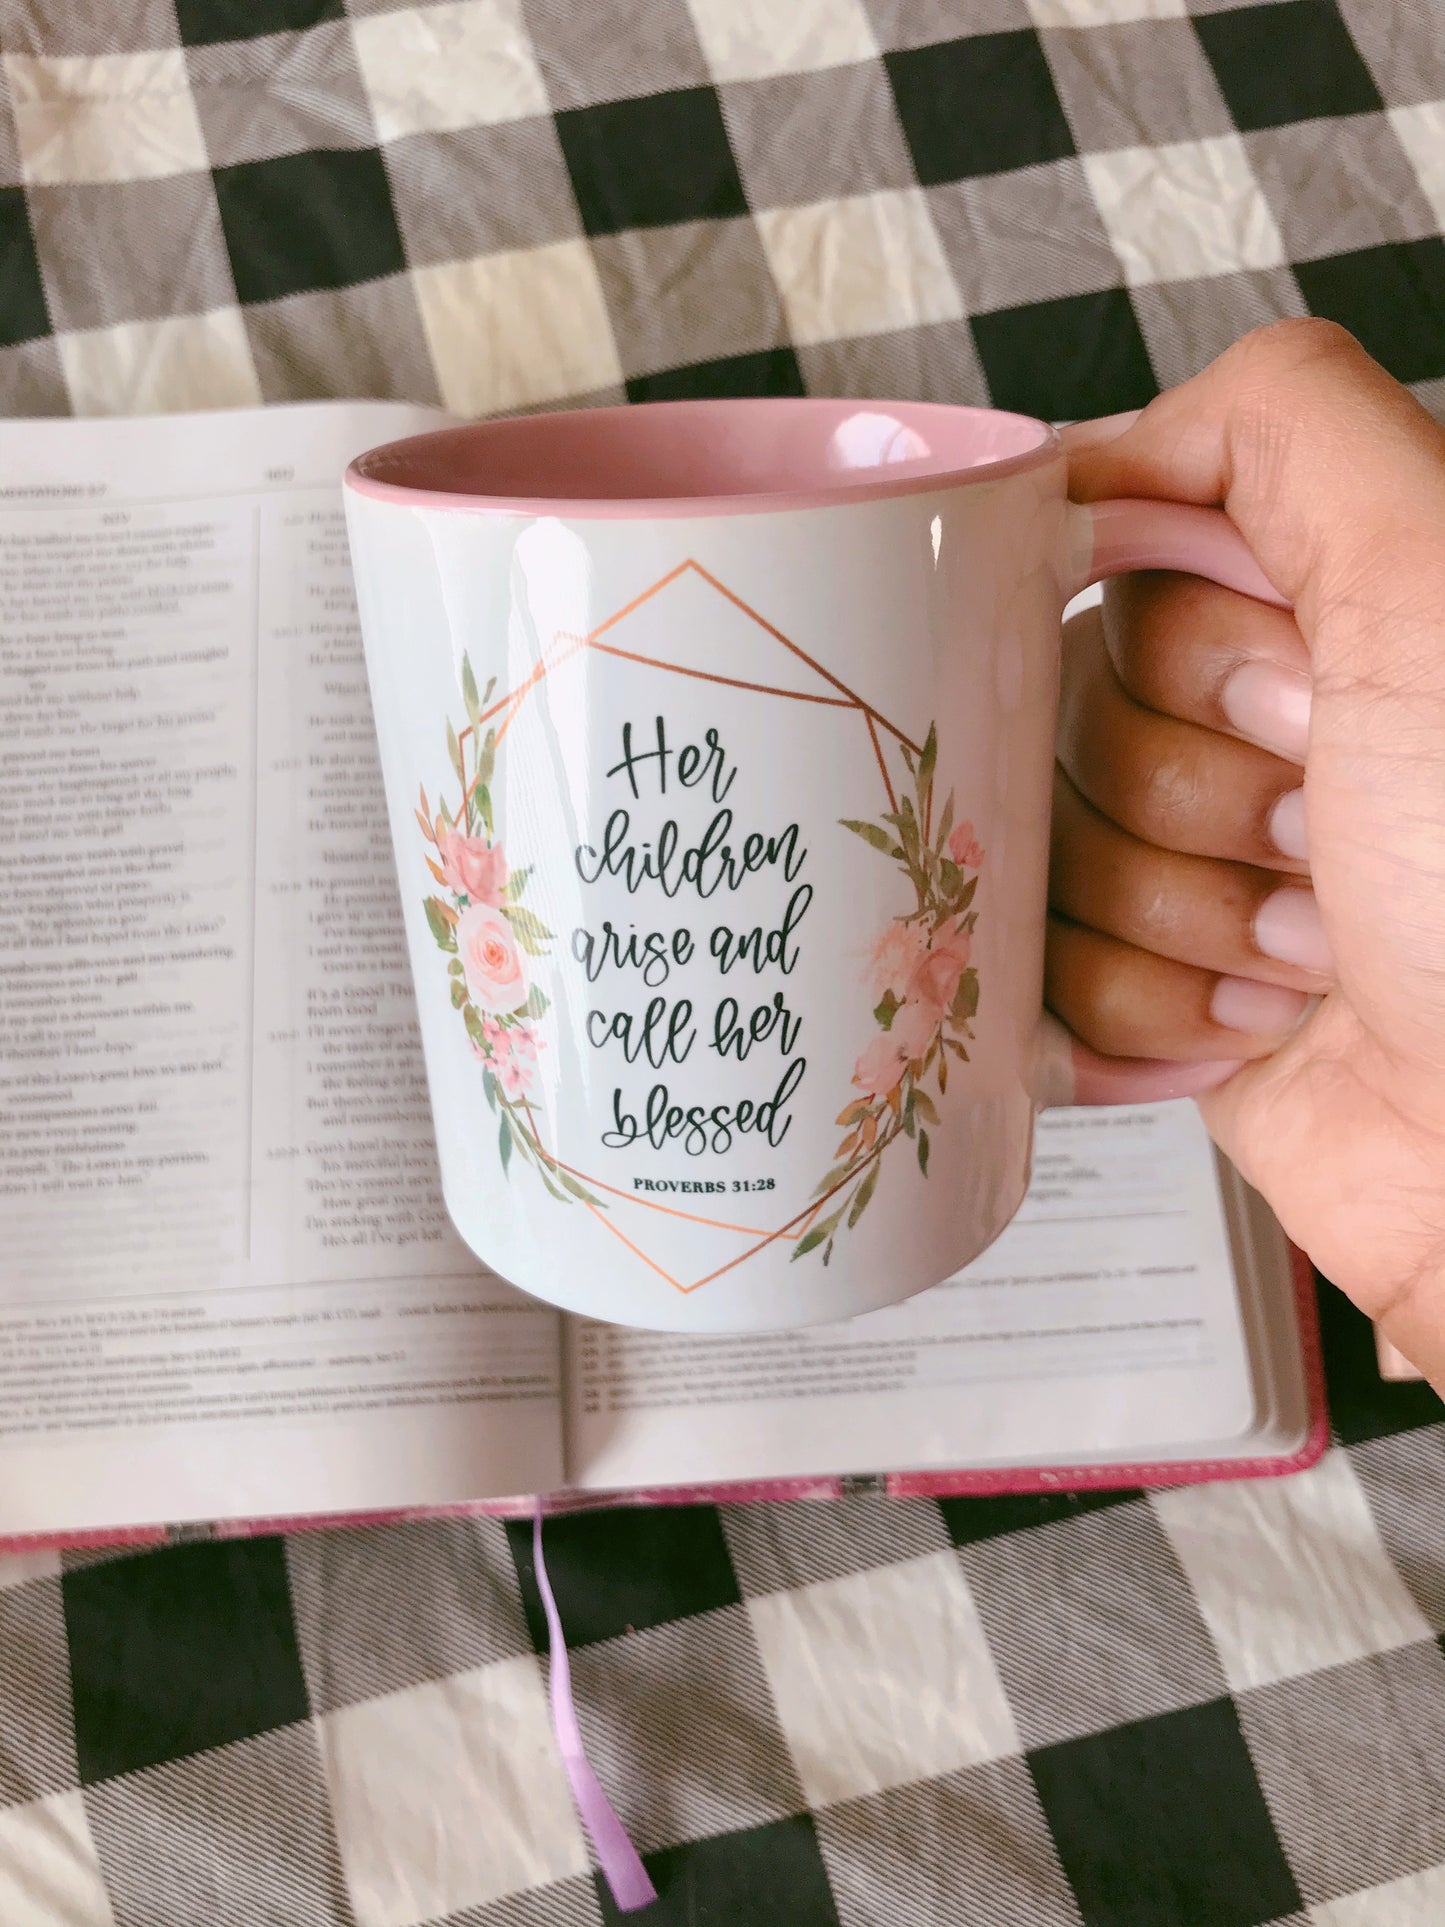 Proverbs 31:28 Her children arise - Christian Mug